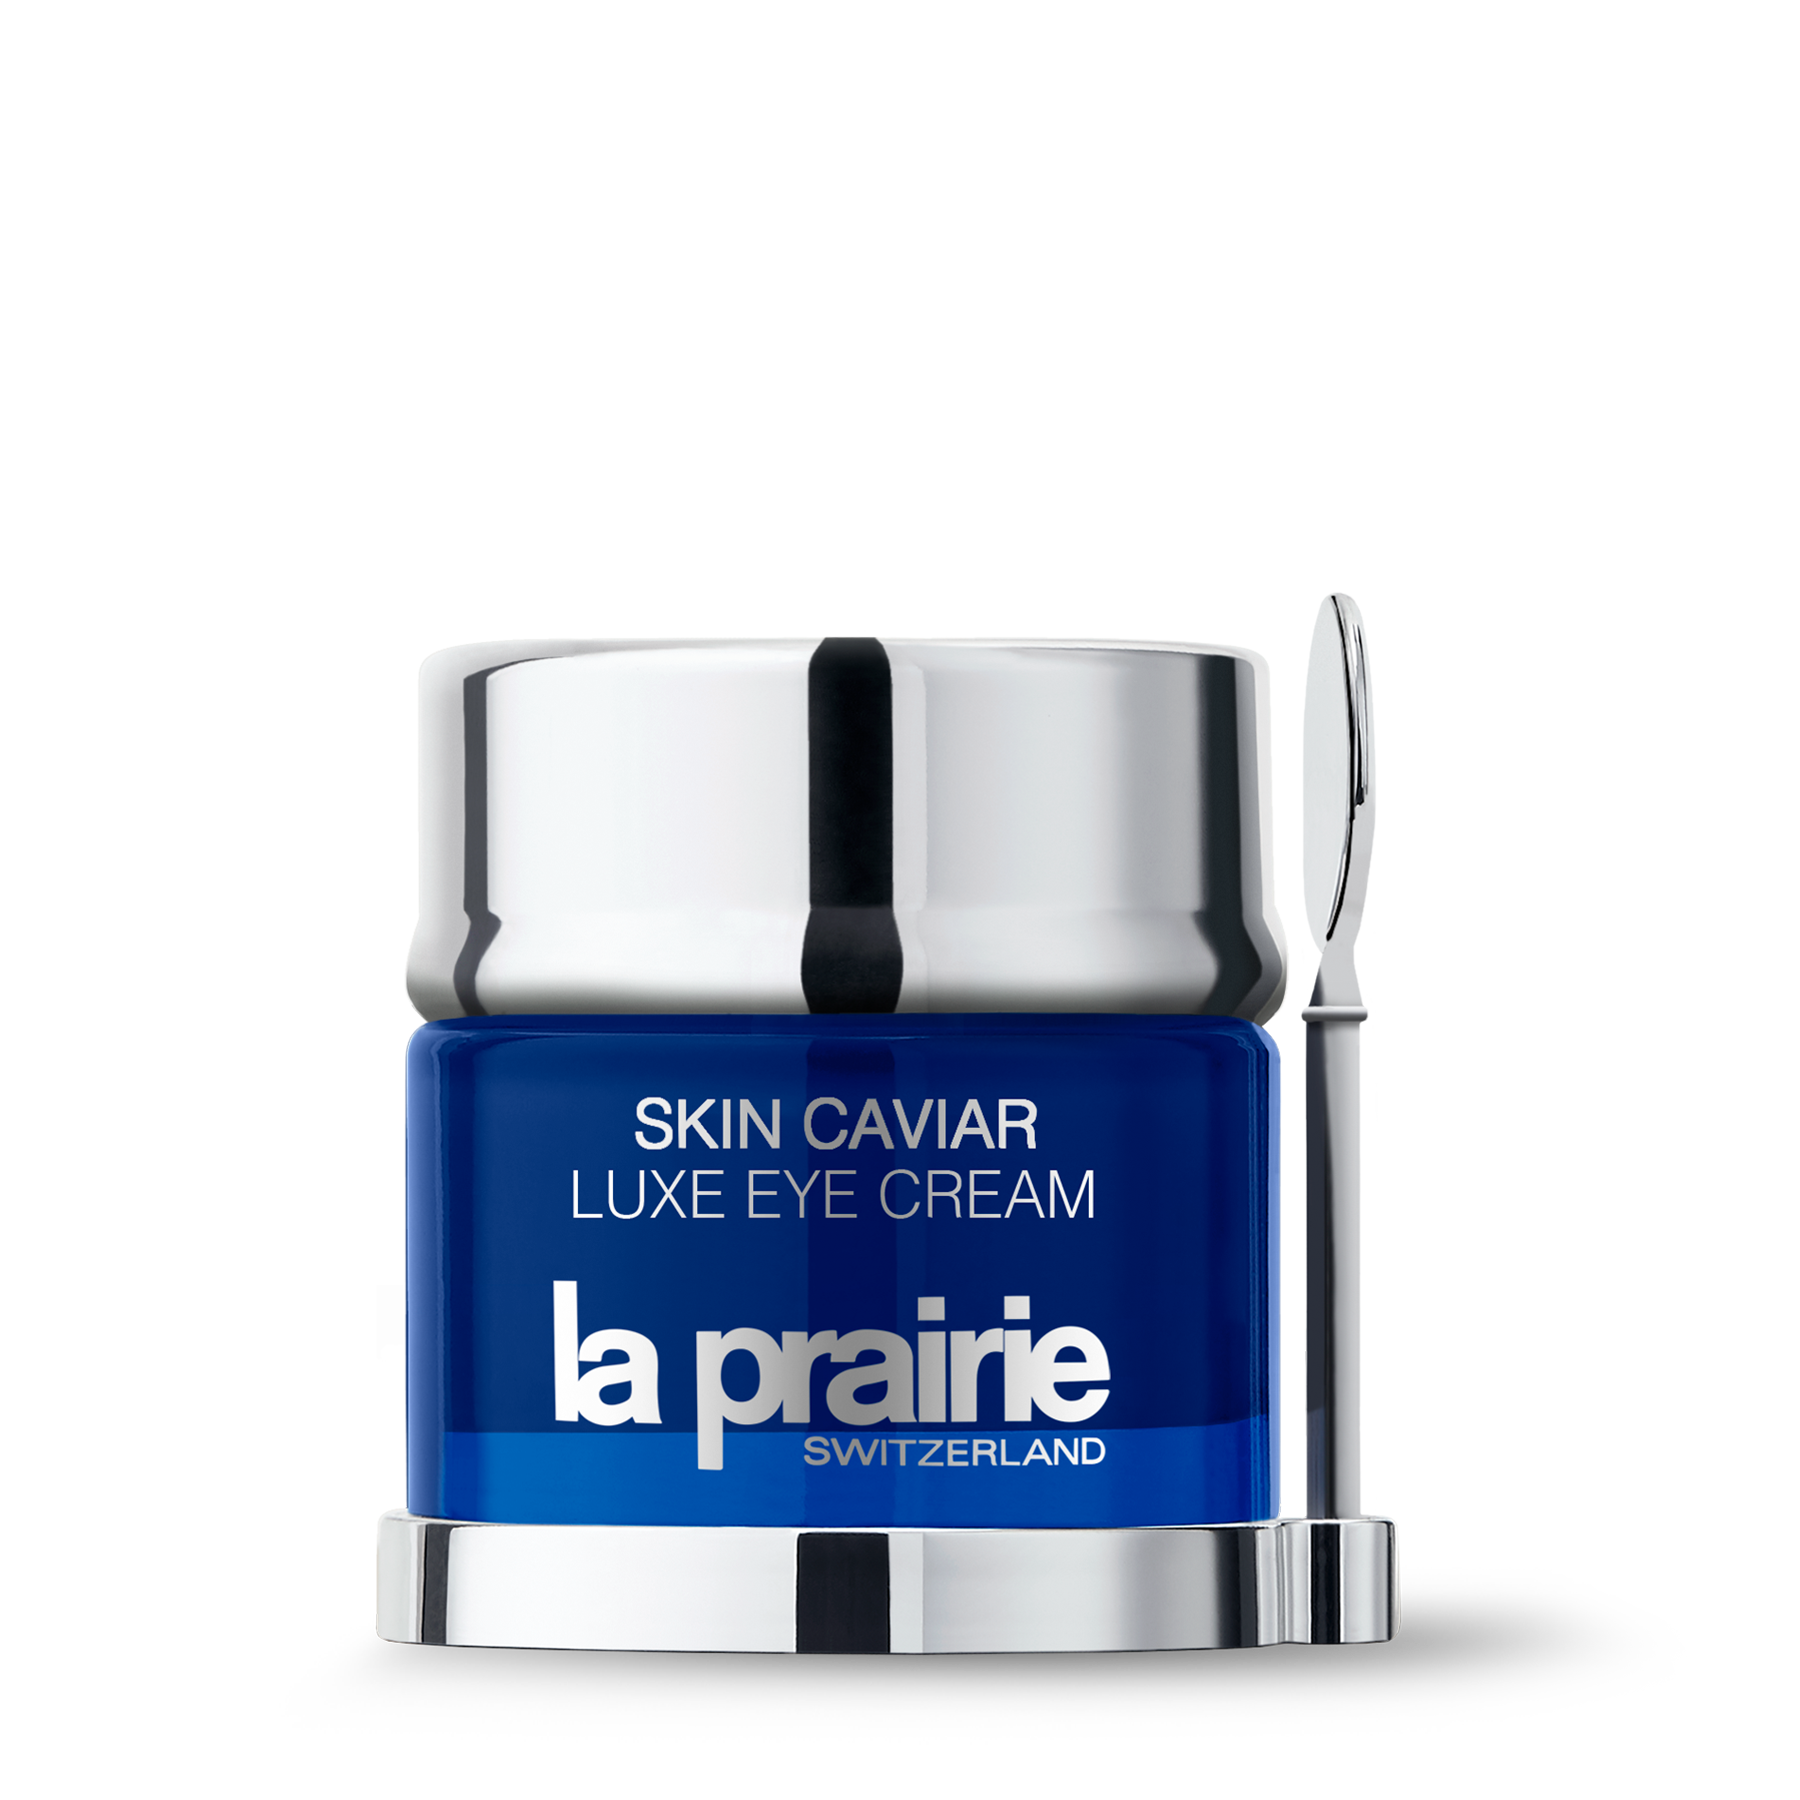 Skin Caviar Luxe Eye Cream: Firming Eye Cream | La Prairie US